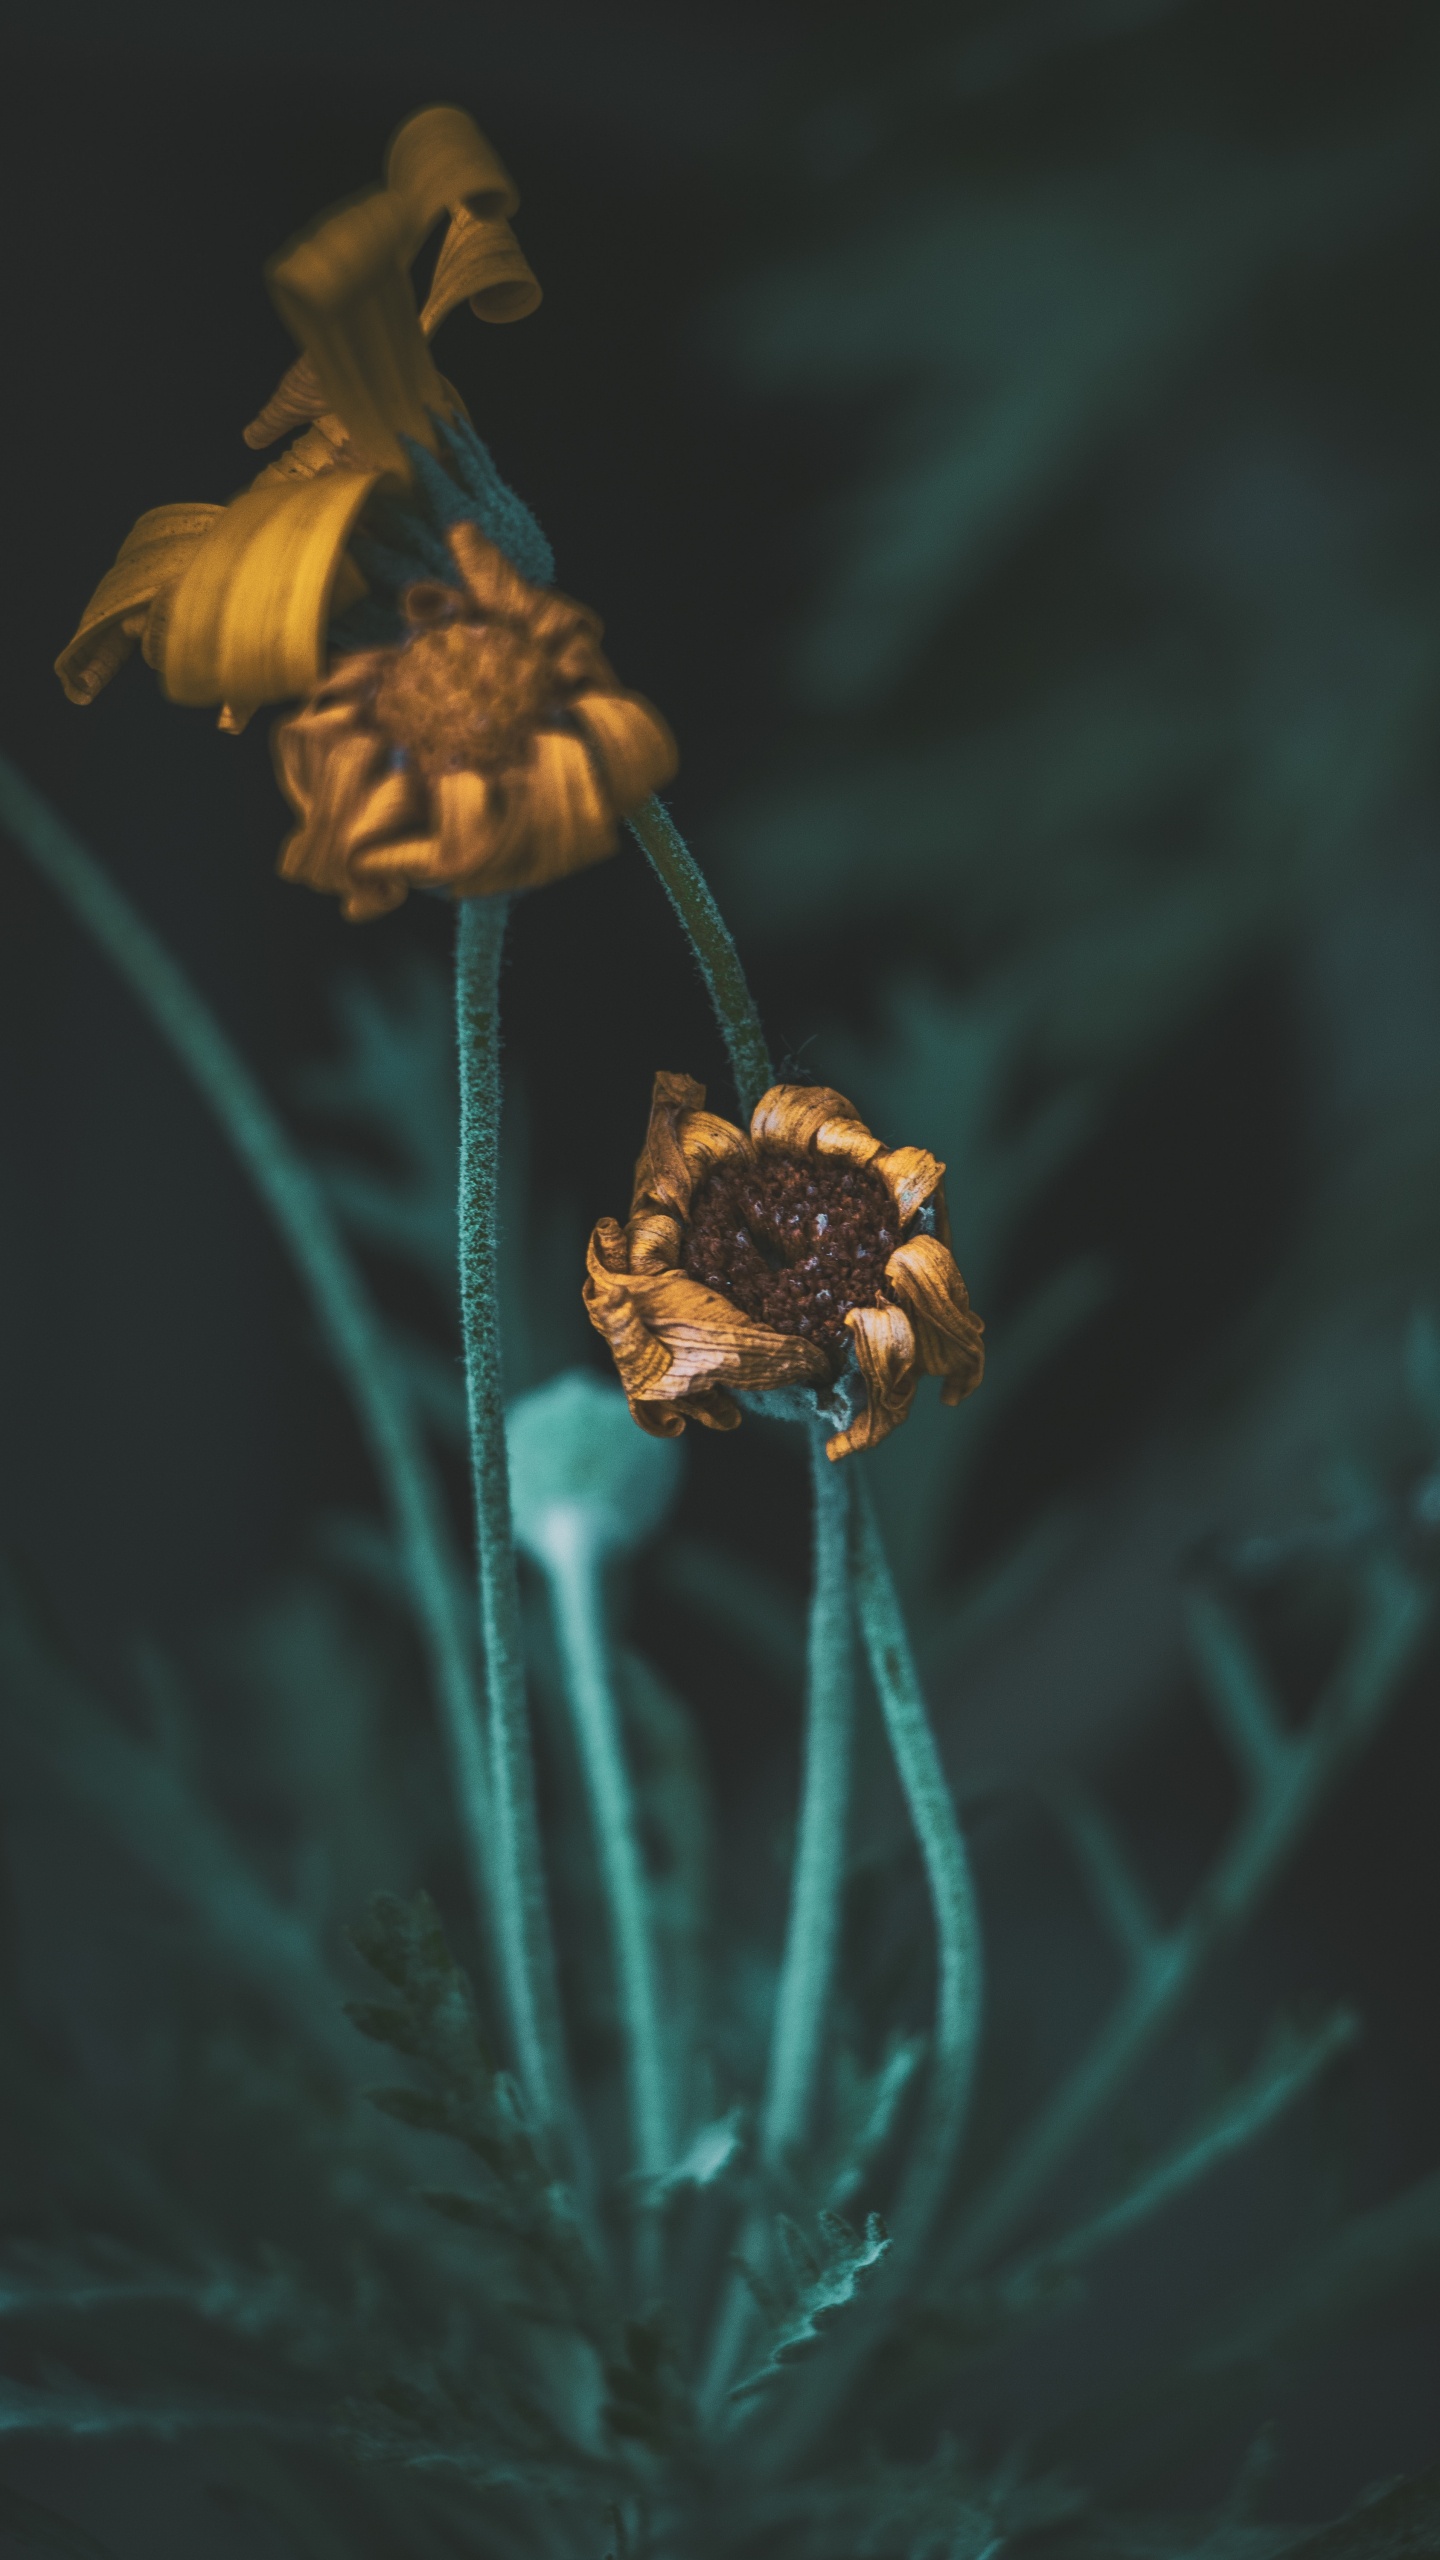 Gelbe Blume in Tilt-Shift-Linse. Wallpaper in 1440x2560 Resolution